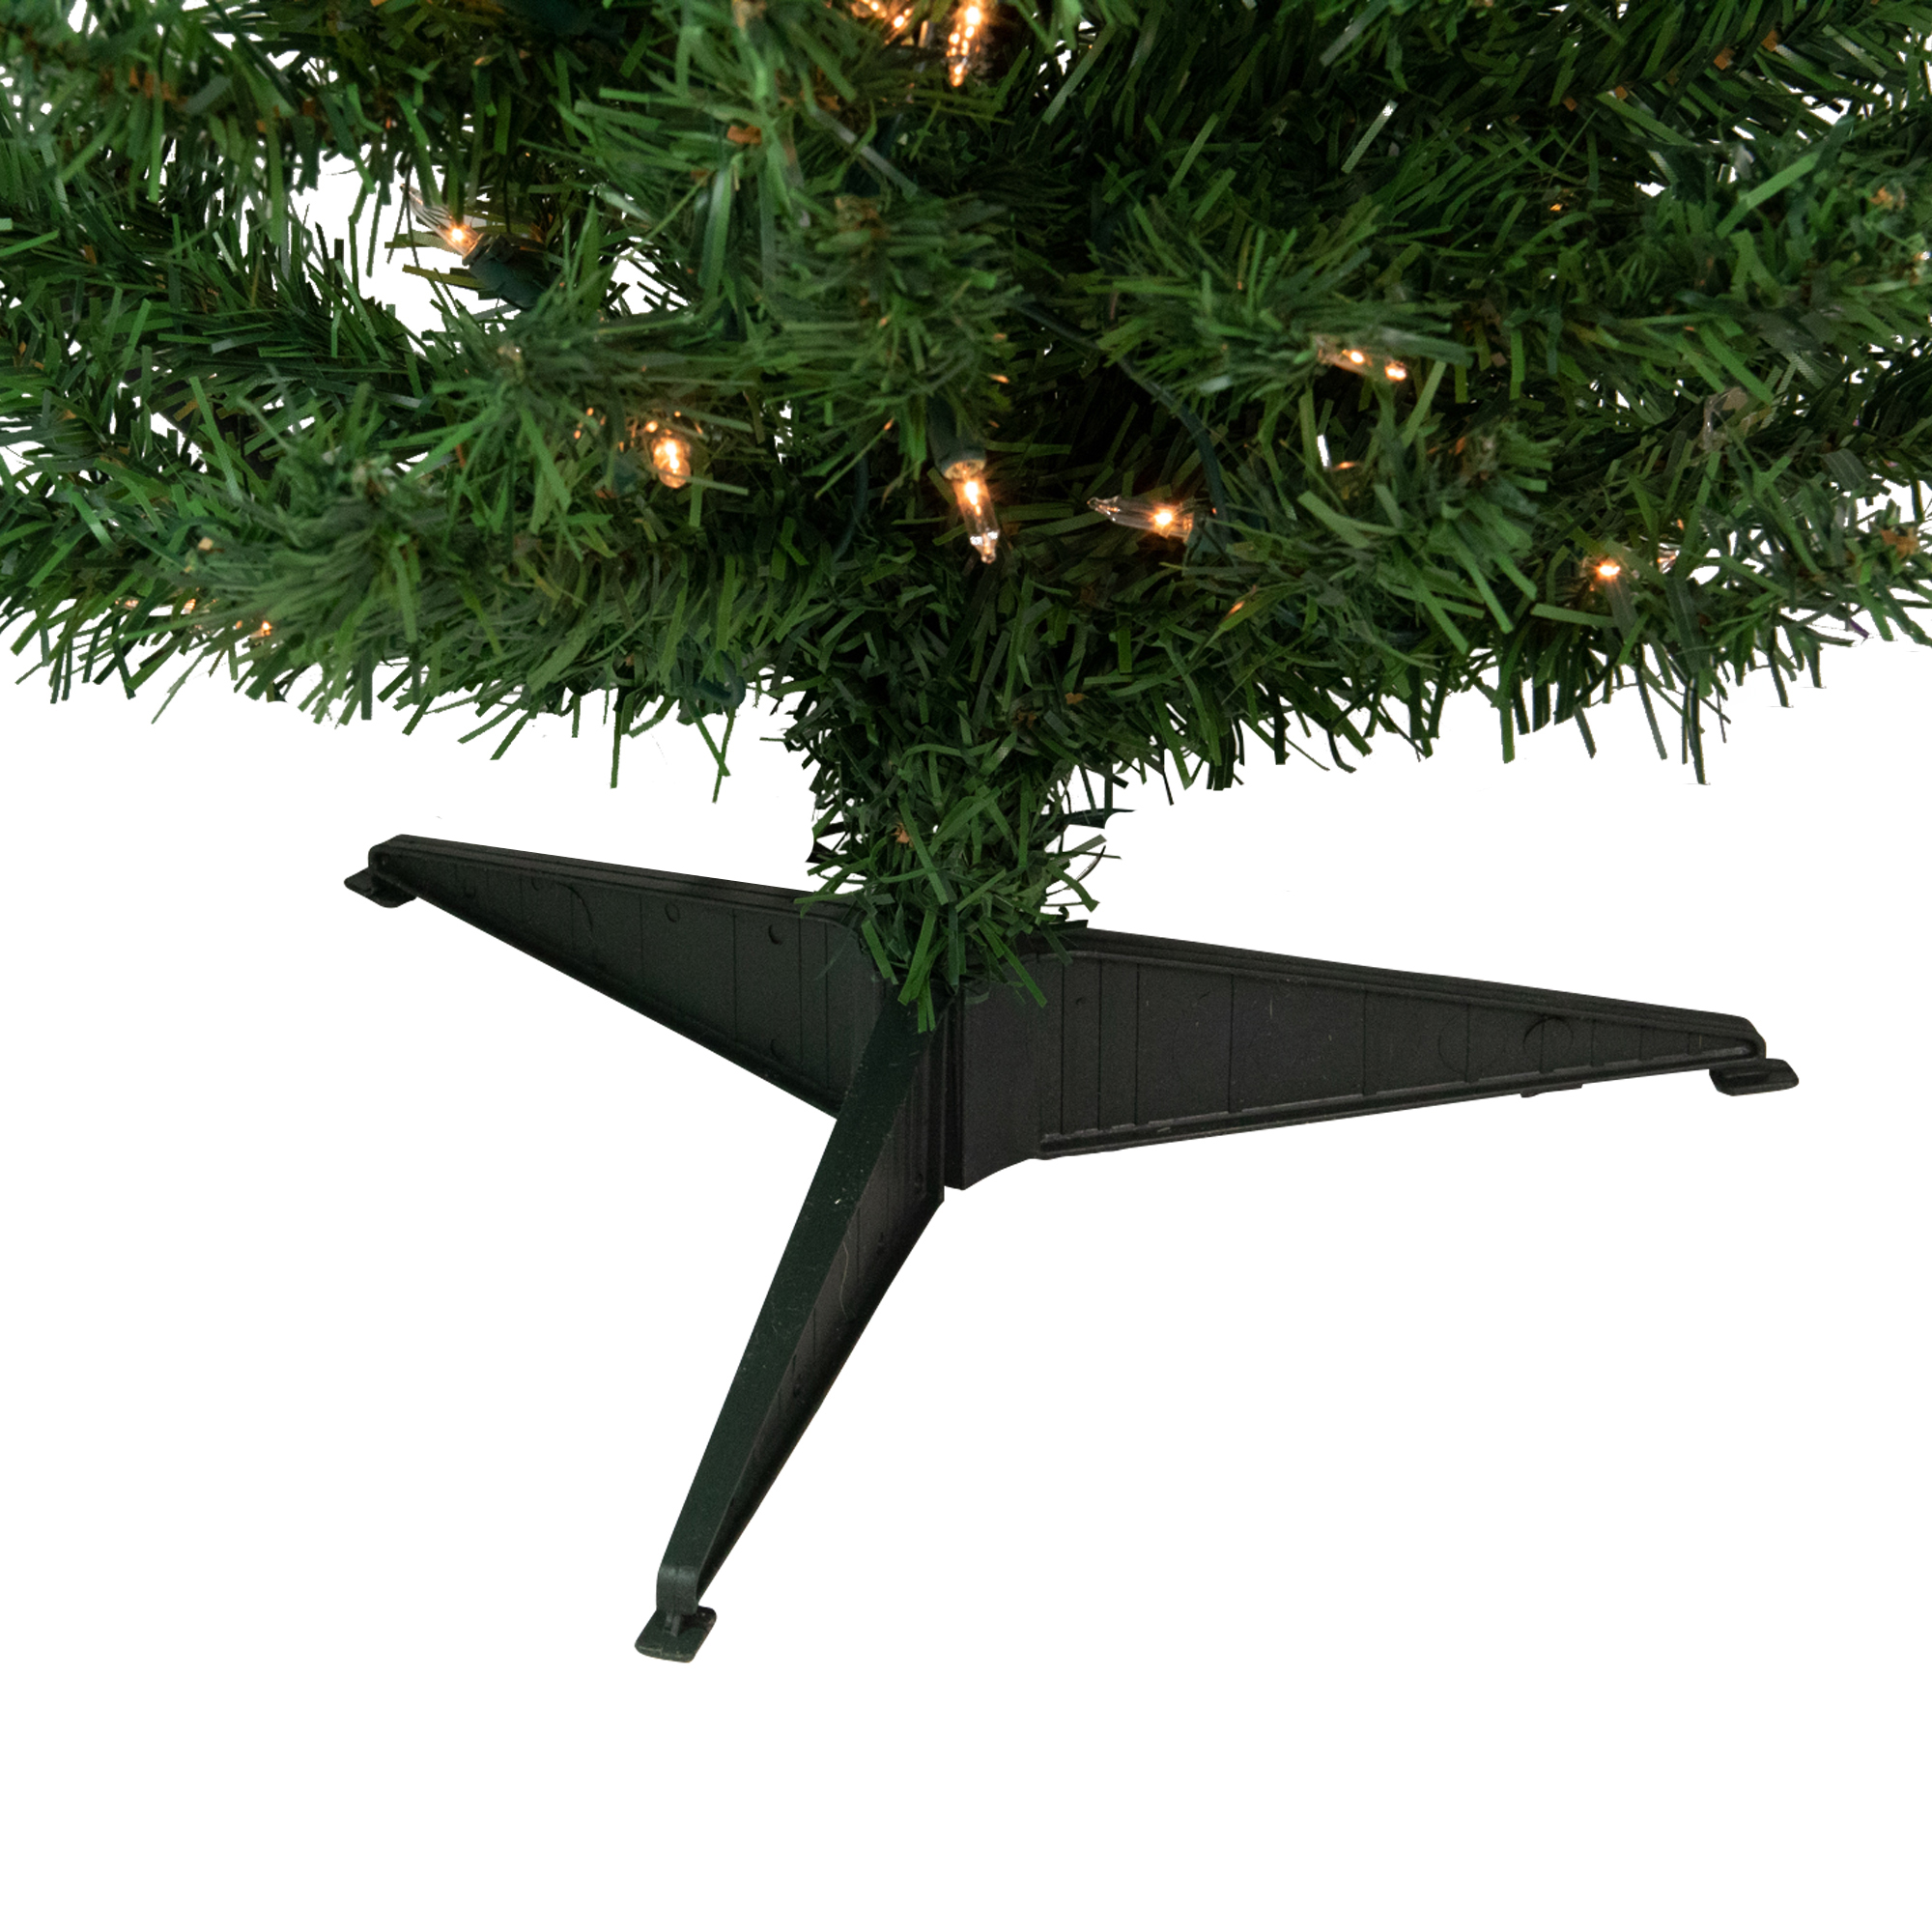 Northlight 3' Pre-Lit Green Medium Niagara Pine Artificial Christmas Tree - Clear Lights - image 5 of 5